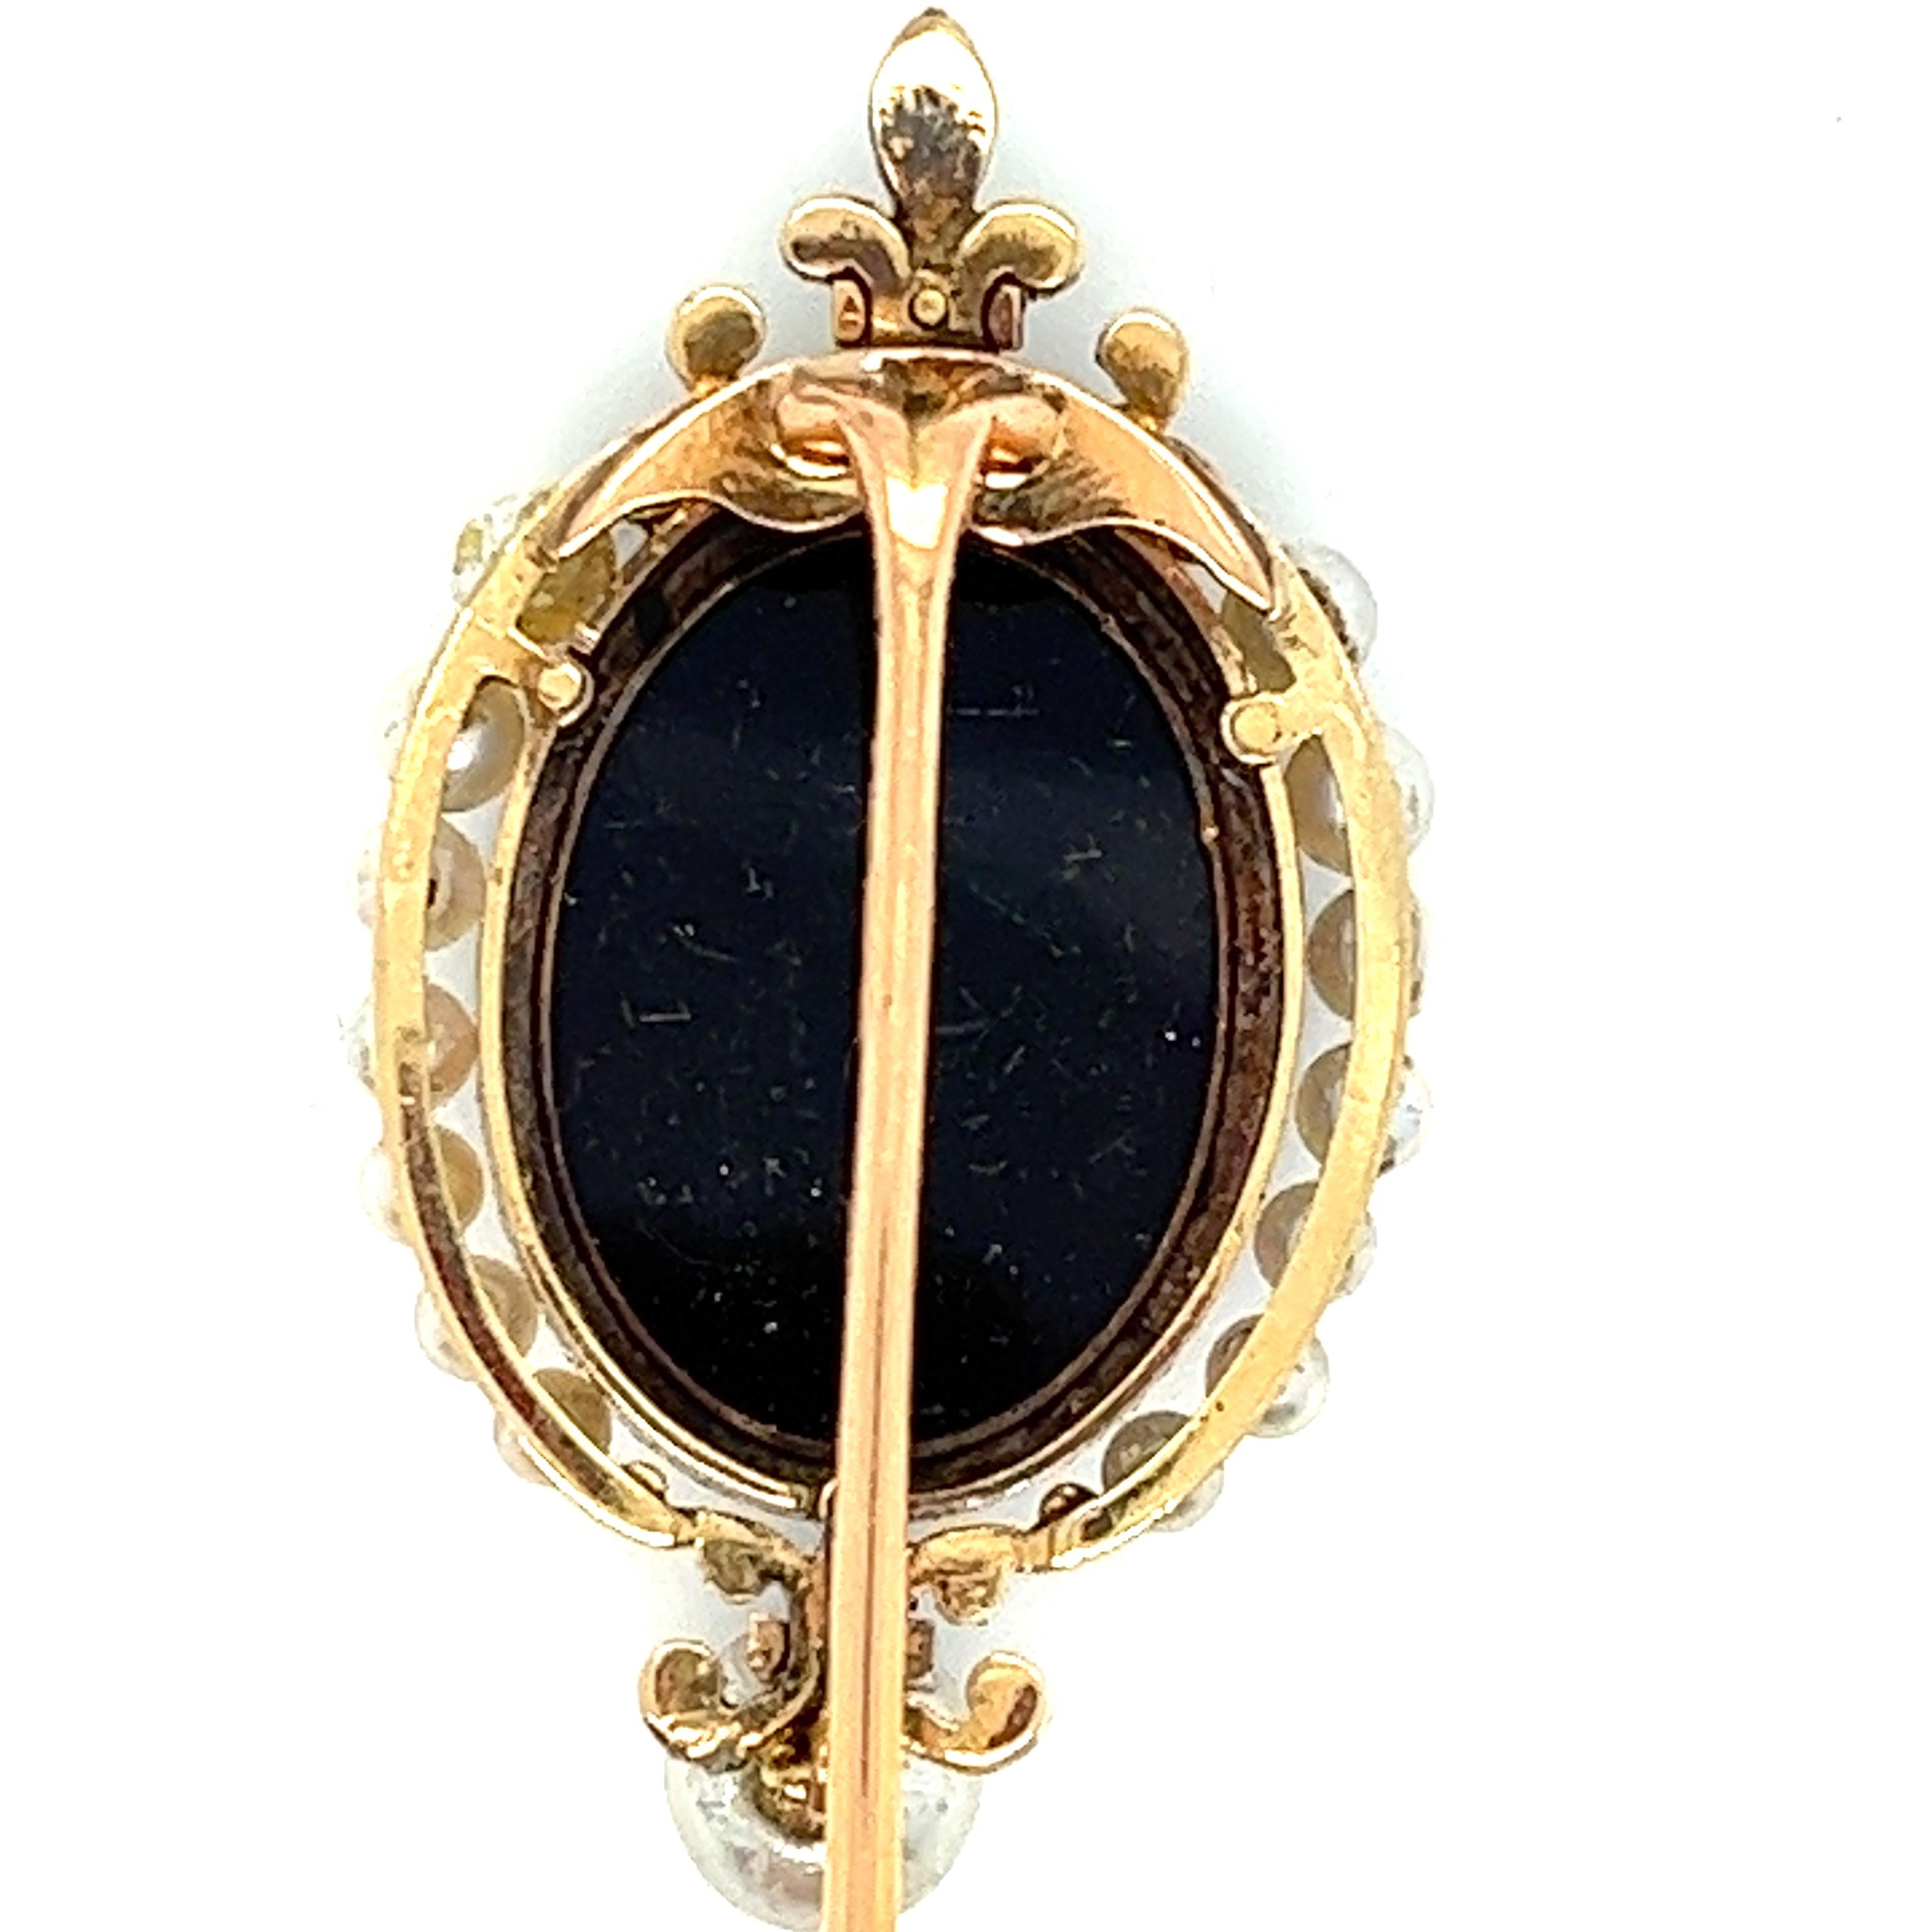 Women's or Men's Rare Antique Sardonyx Cameo Pin - 18K Gold, Diamonds, and Pearls, Circa 1850. For Sale